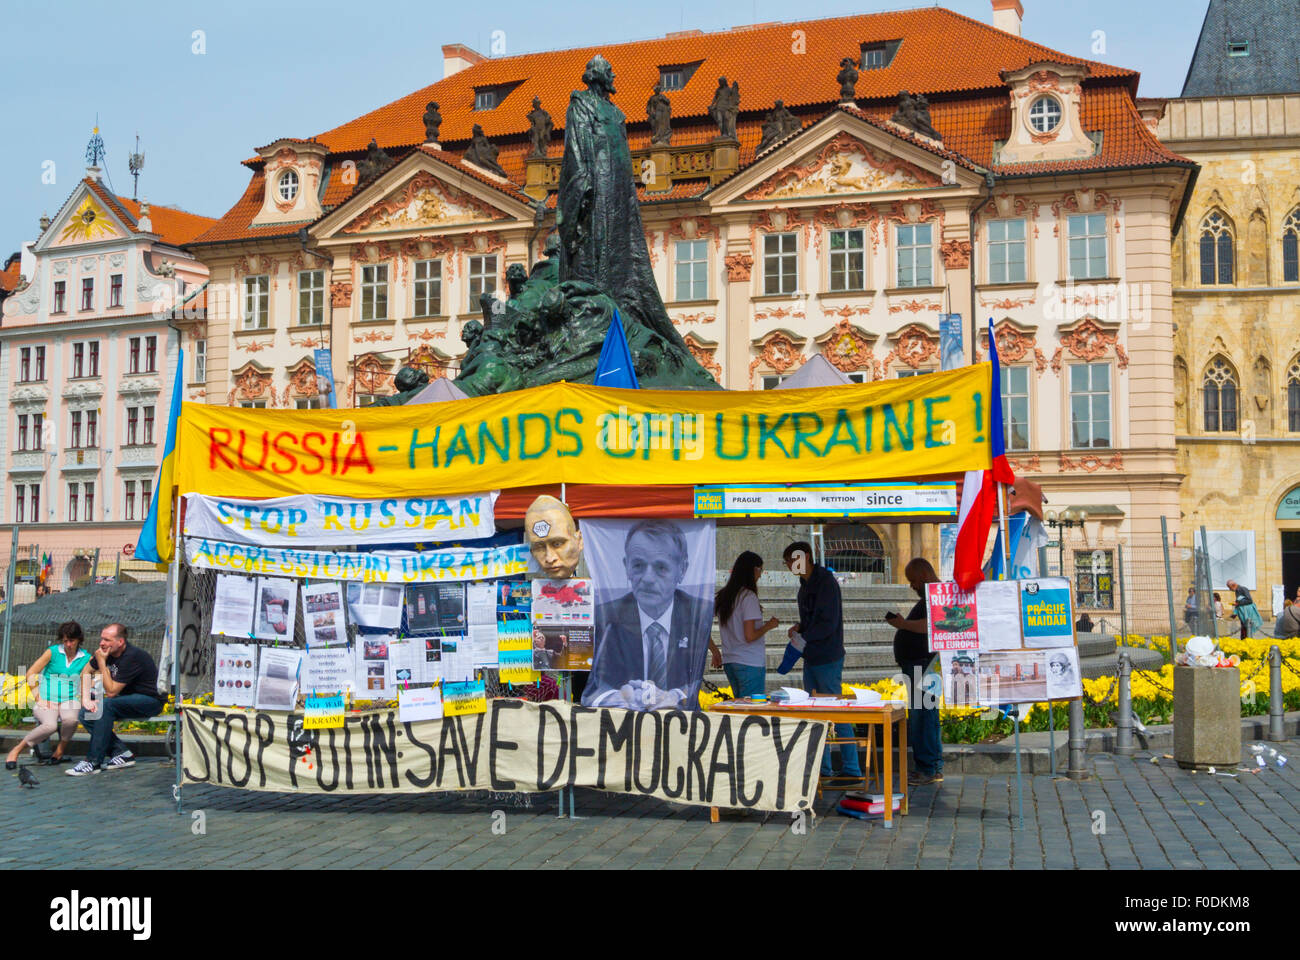 Anti-Russian propaganda booth, old town square, Prague, Czech Republic, Europe Stock Photo